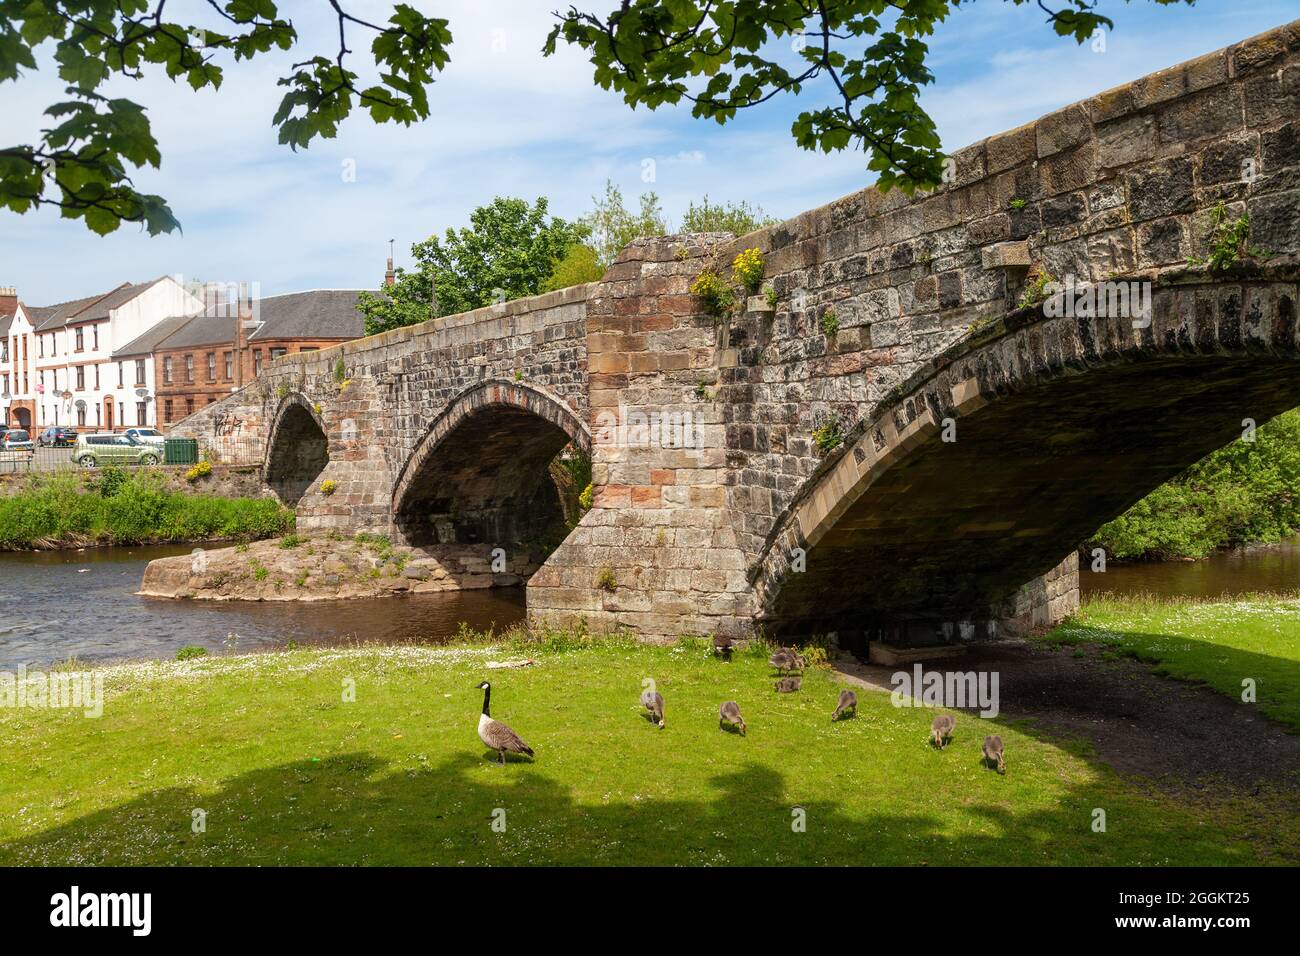 The Old Bridge (Roman Bridge) over the River Esk in Musselburgh, Scotland Stock Photo